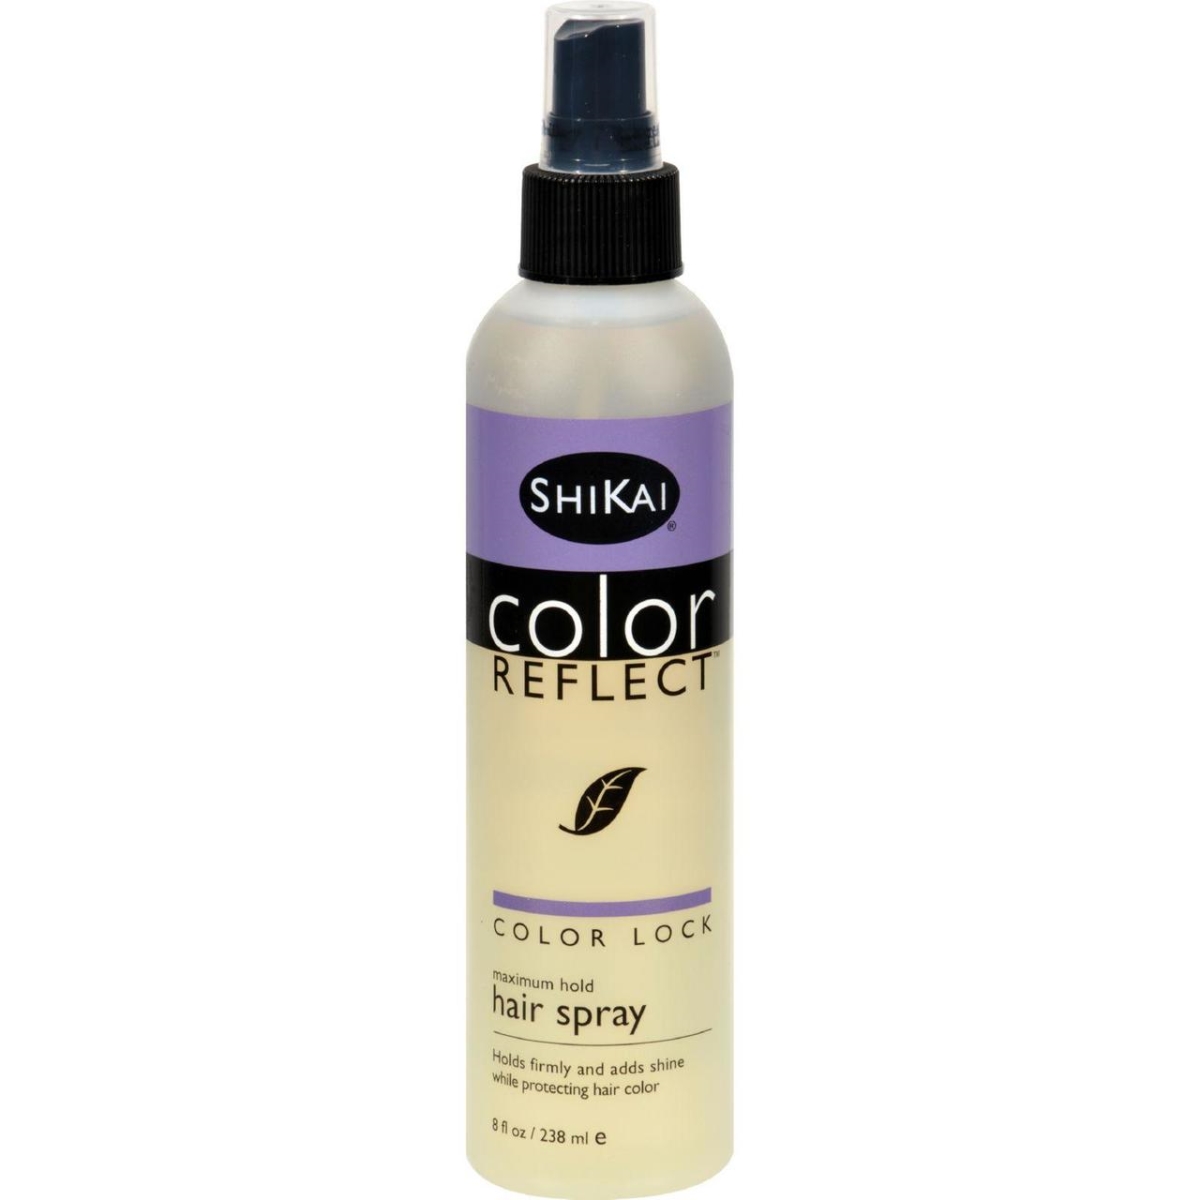 Hg0576132 8 Fl Oz Color Reflect Color Lock Hair Spray